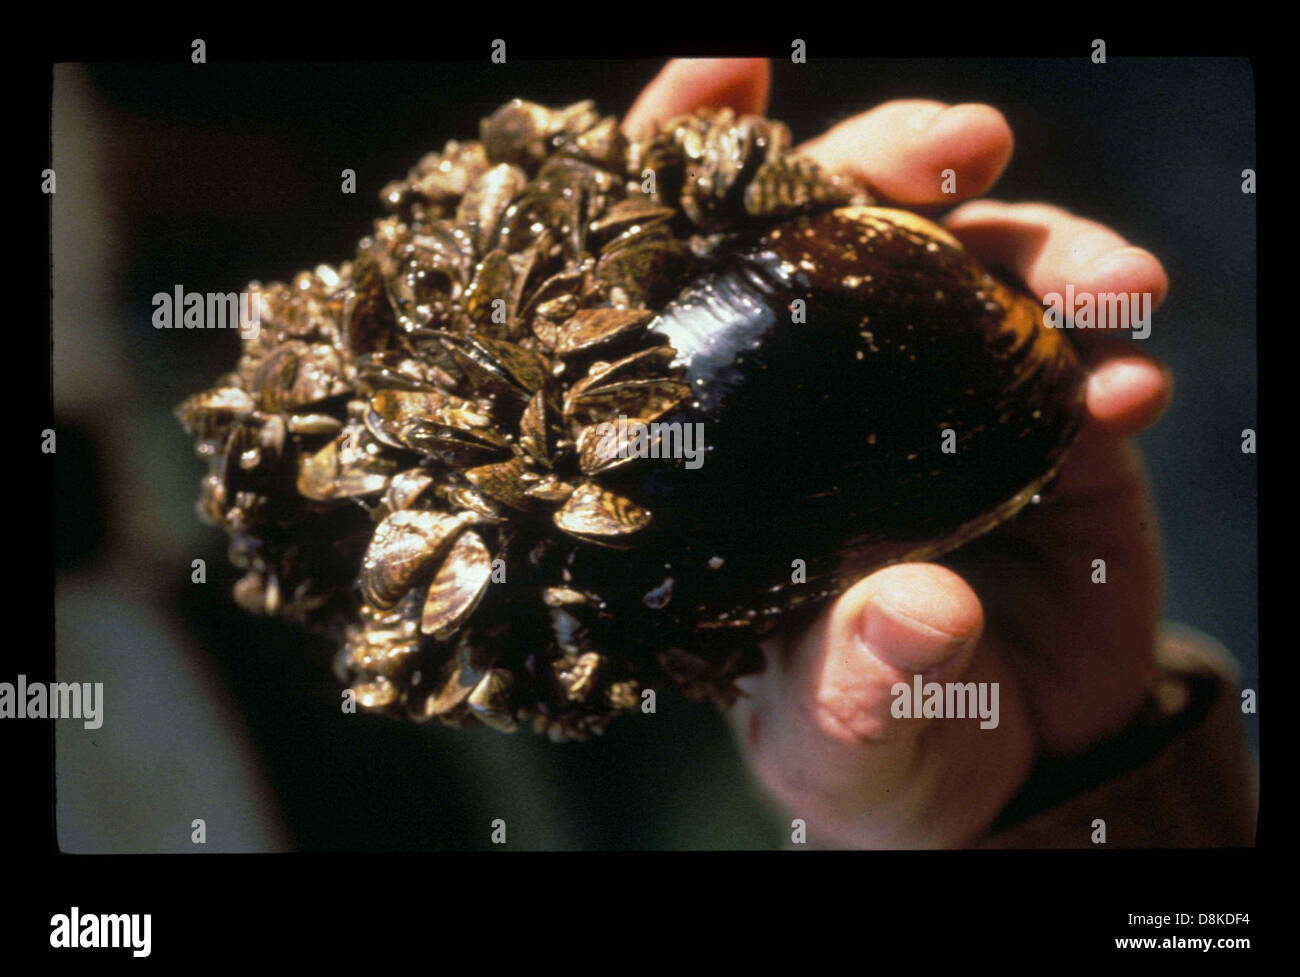 Zebra mussels dreissena polymorpha on native mussel. Stock Photo